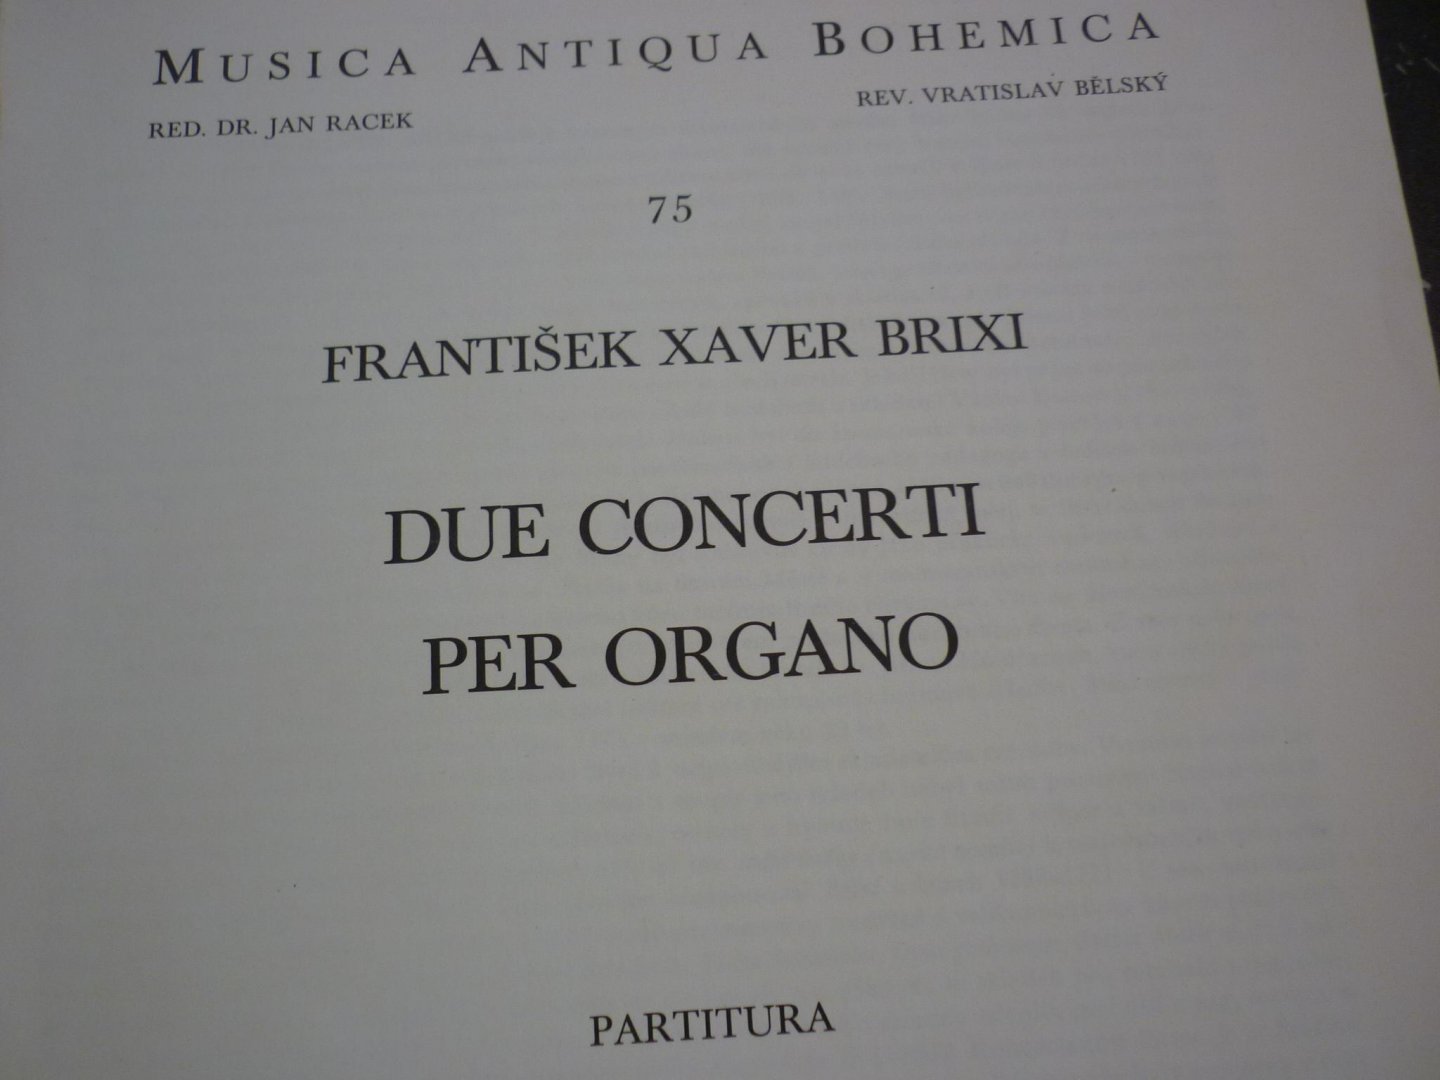 Brixi; Frantisek Xaver - Due Concerti per Organo (Musica Antiqua Bohemica - 75)